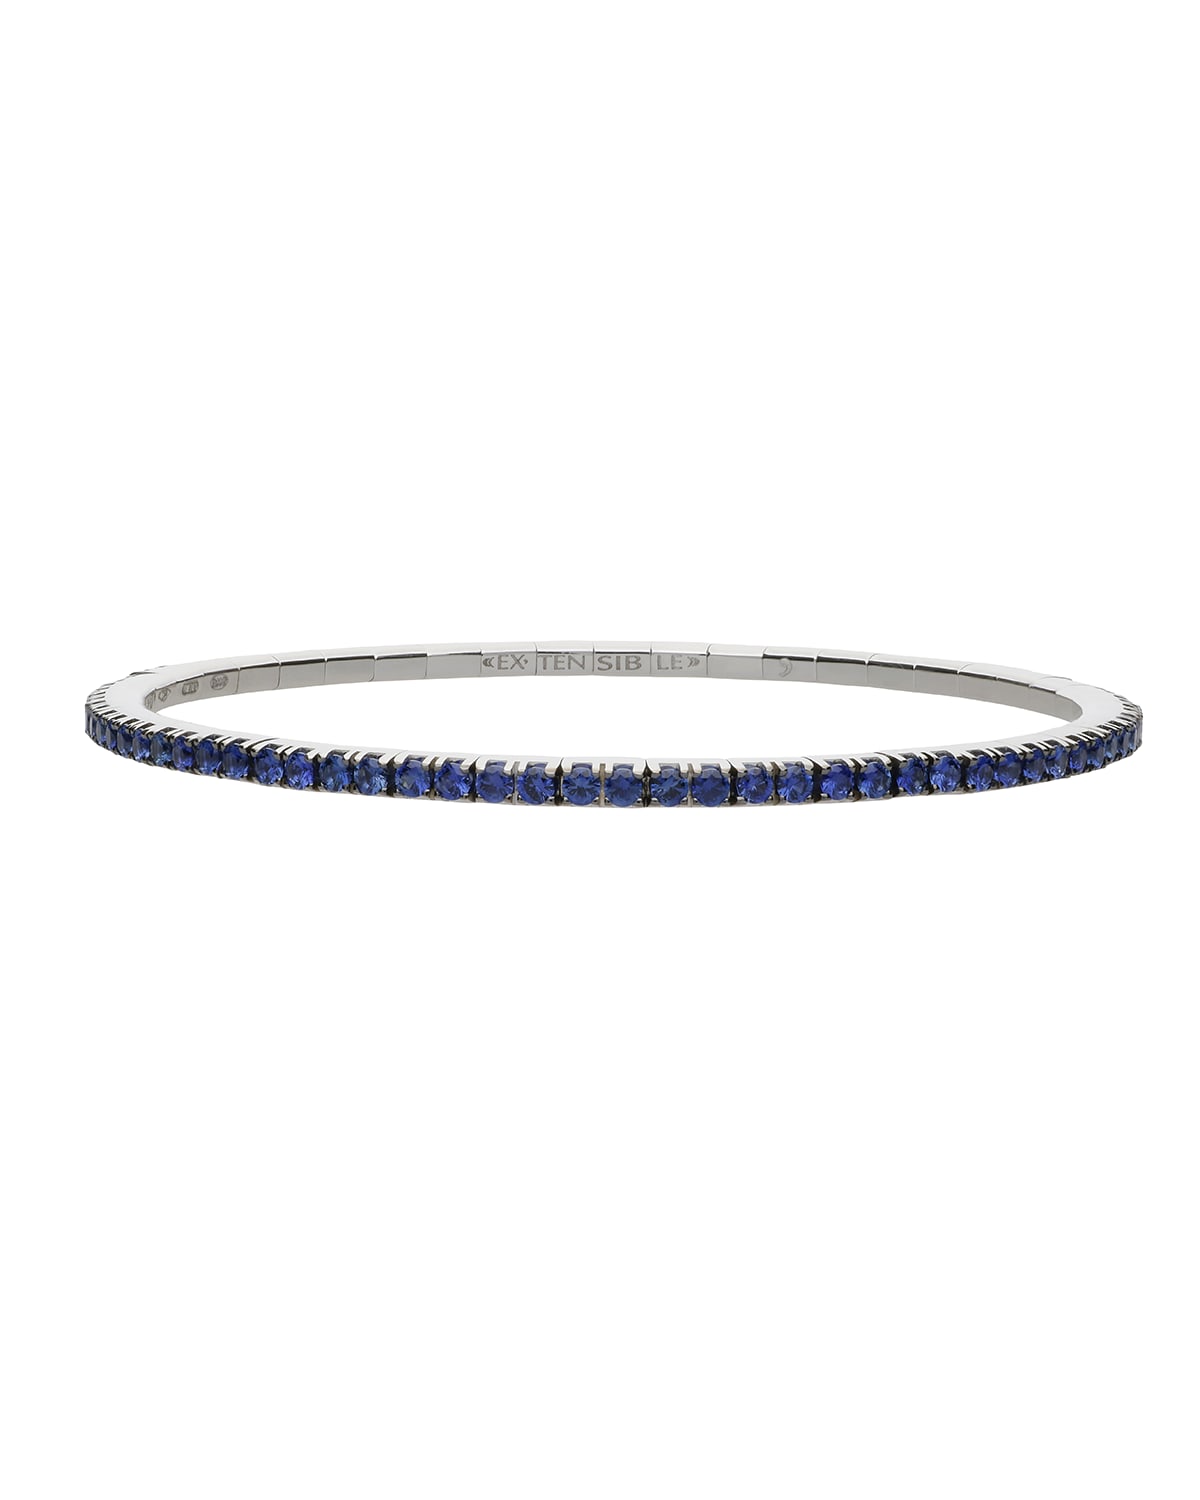 Round Blue Sapphire Stretch Tennis Bracelet